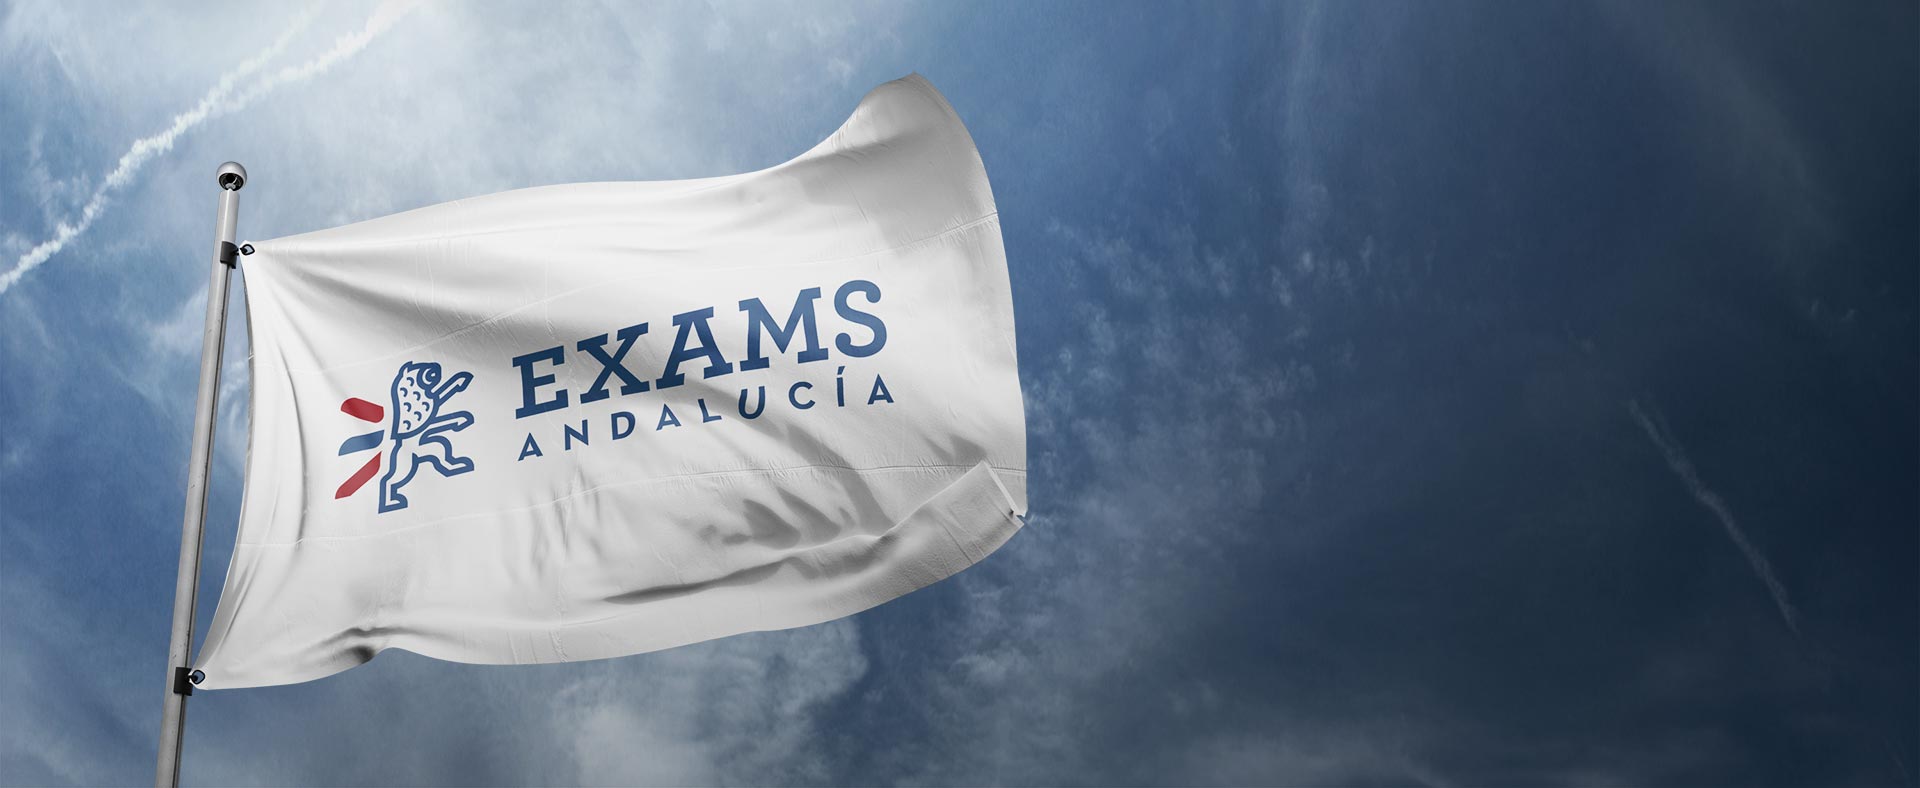 6-exams-logotipo-bandera